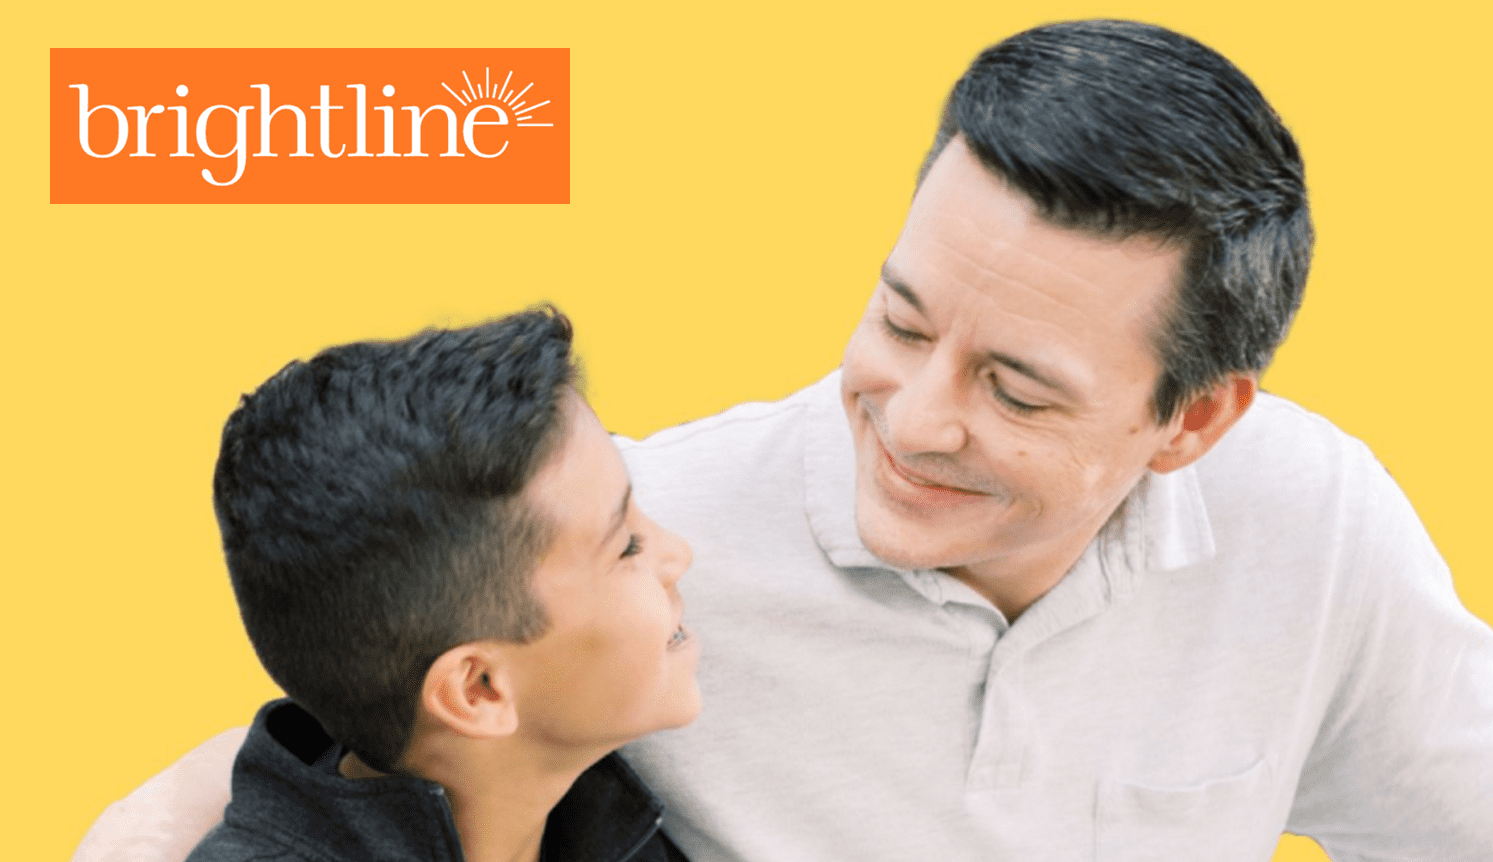 Brightline Raises $105M for Adolescent Mental Health